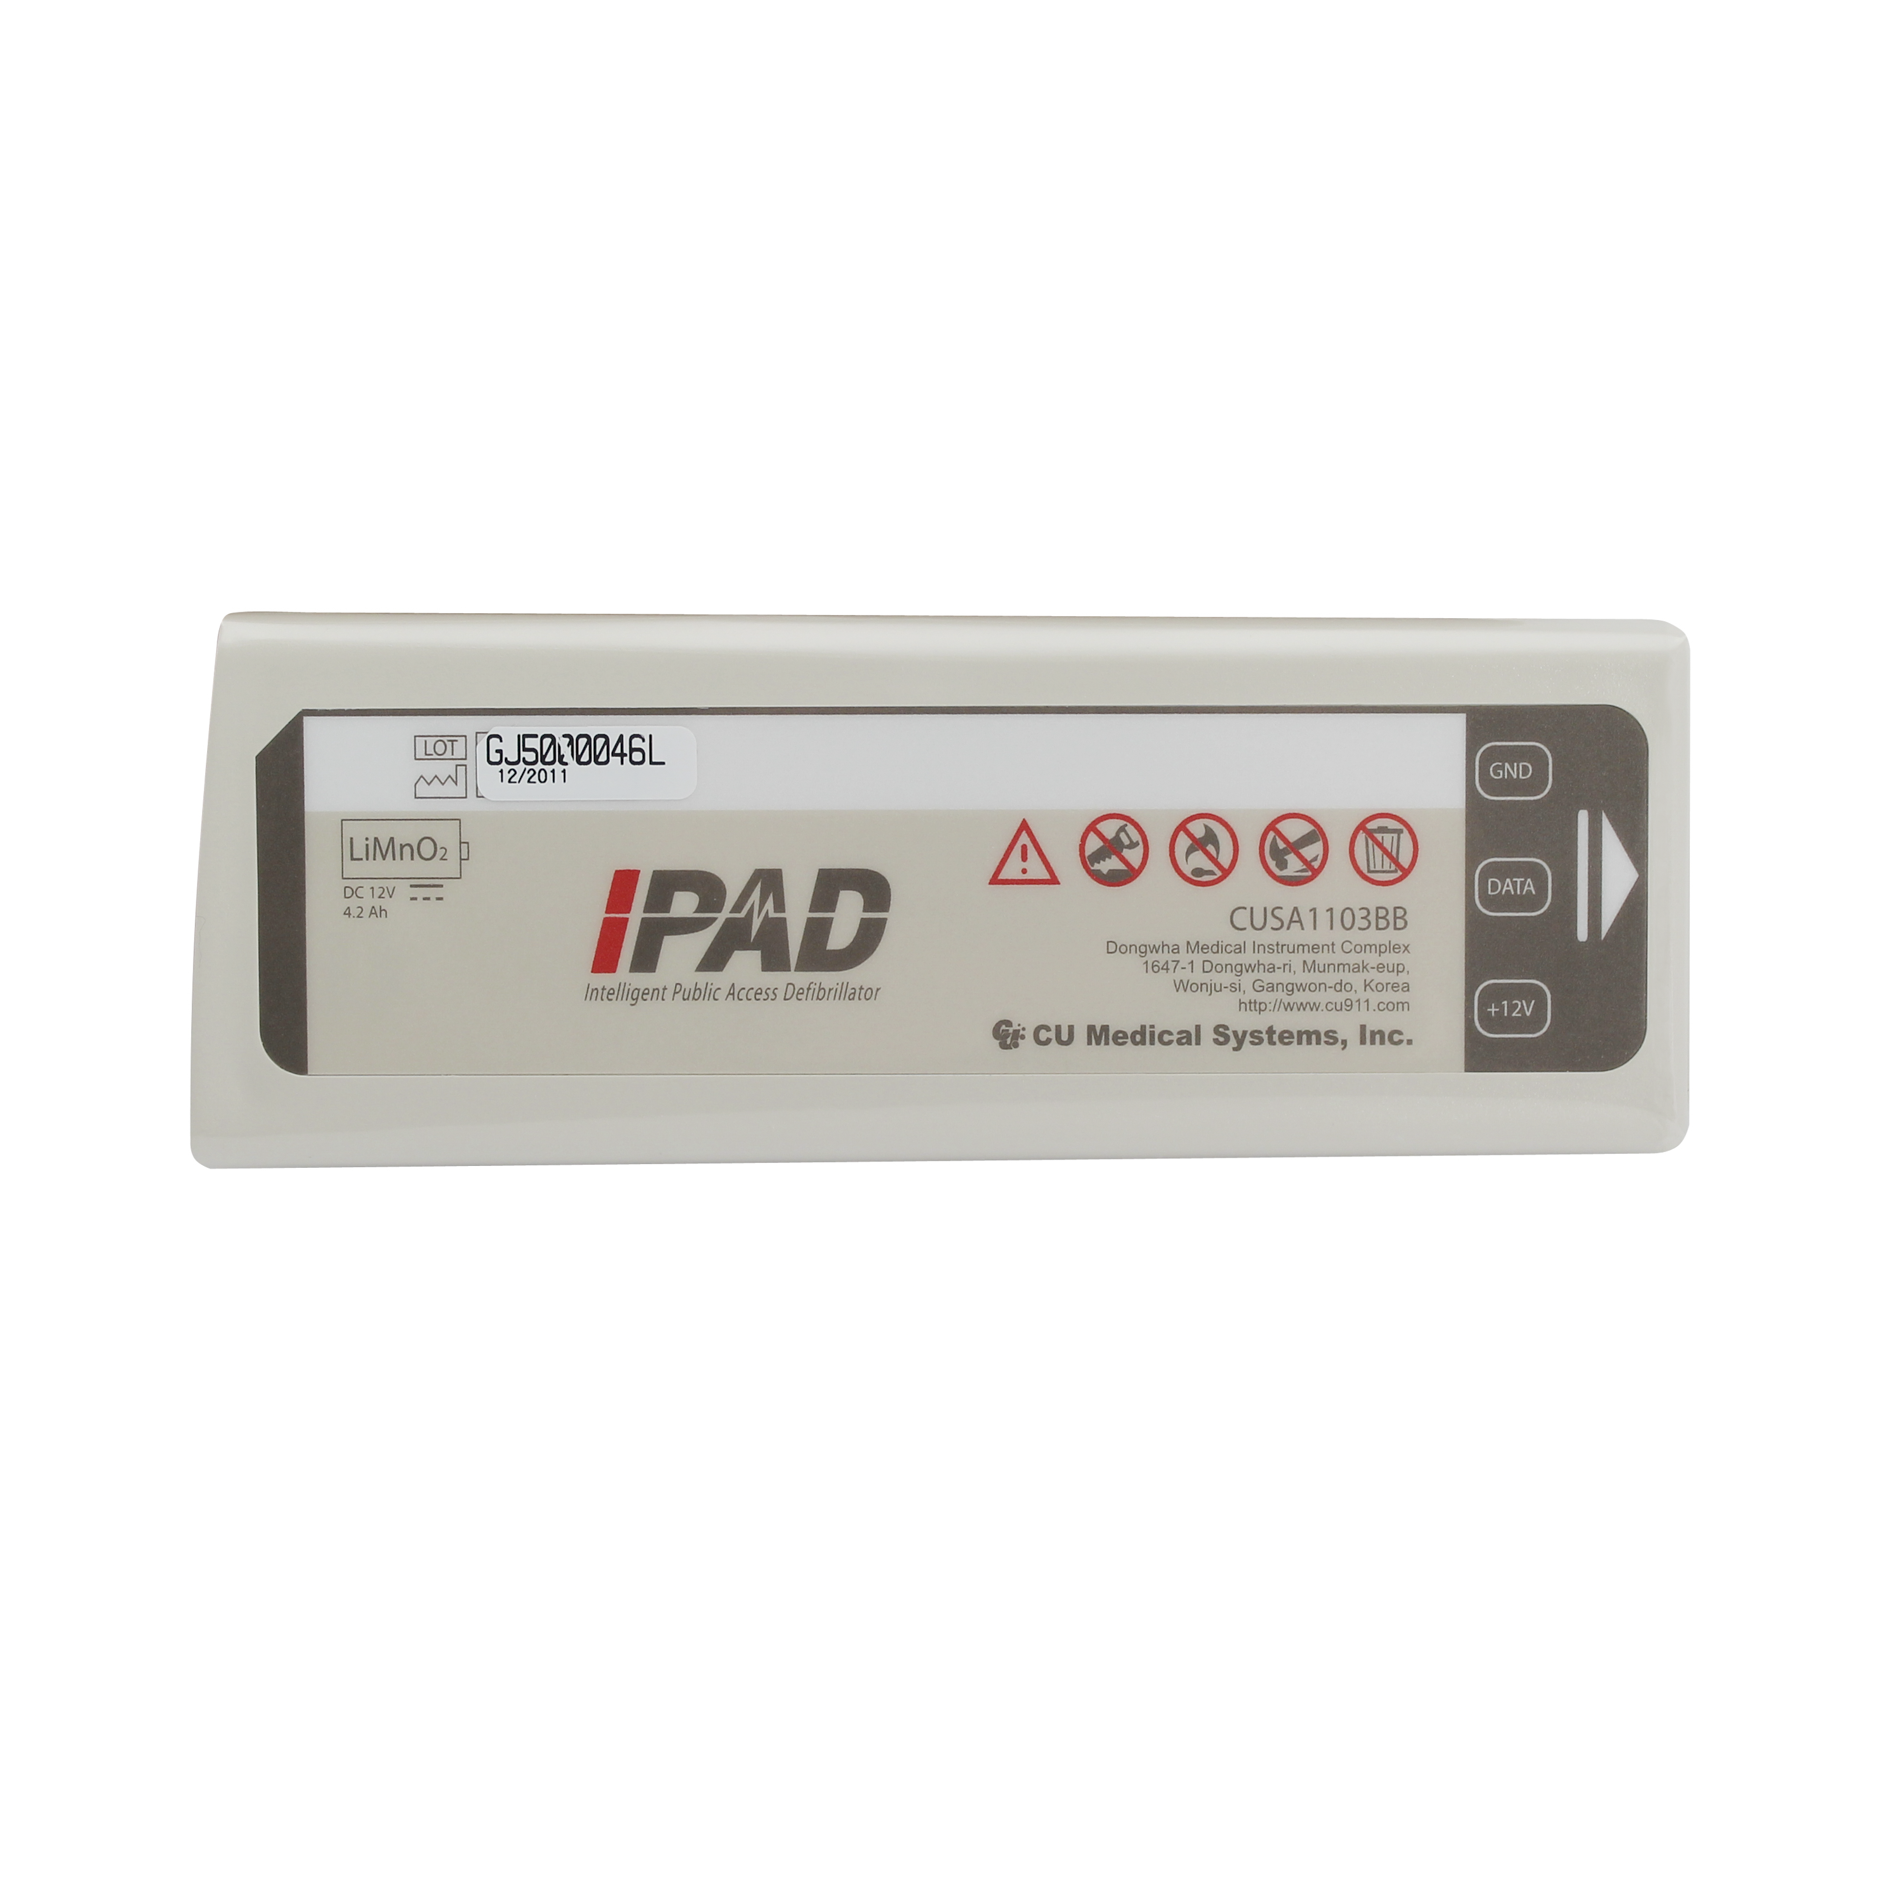 Batéria iPAD SP1-2 nedobíjateĺná,HC